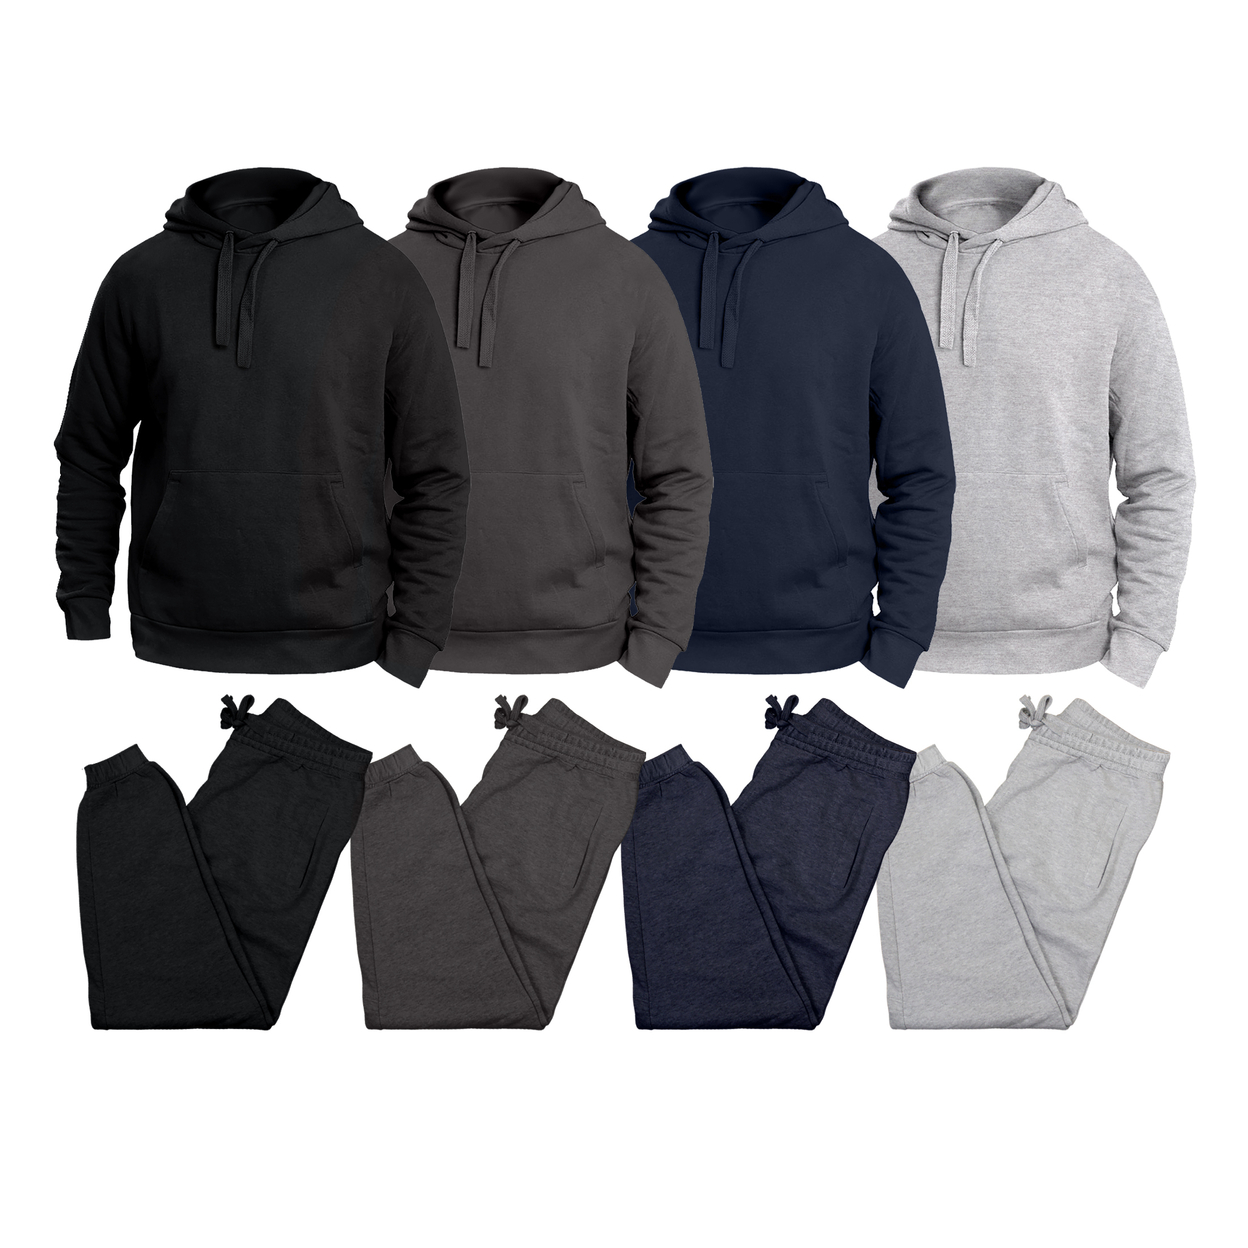 Multi-Pack: Big & Tall Men's Winter Warm Cozy Athletic Fleece Lined Multi-Pocket Cargo Sweatsuit - Grey, 2-pack, Medium